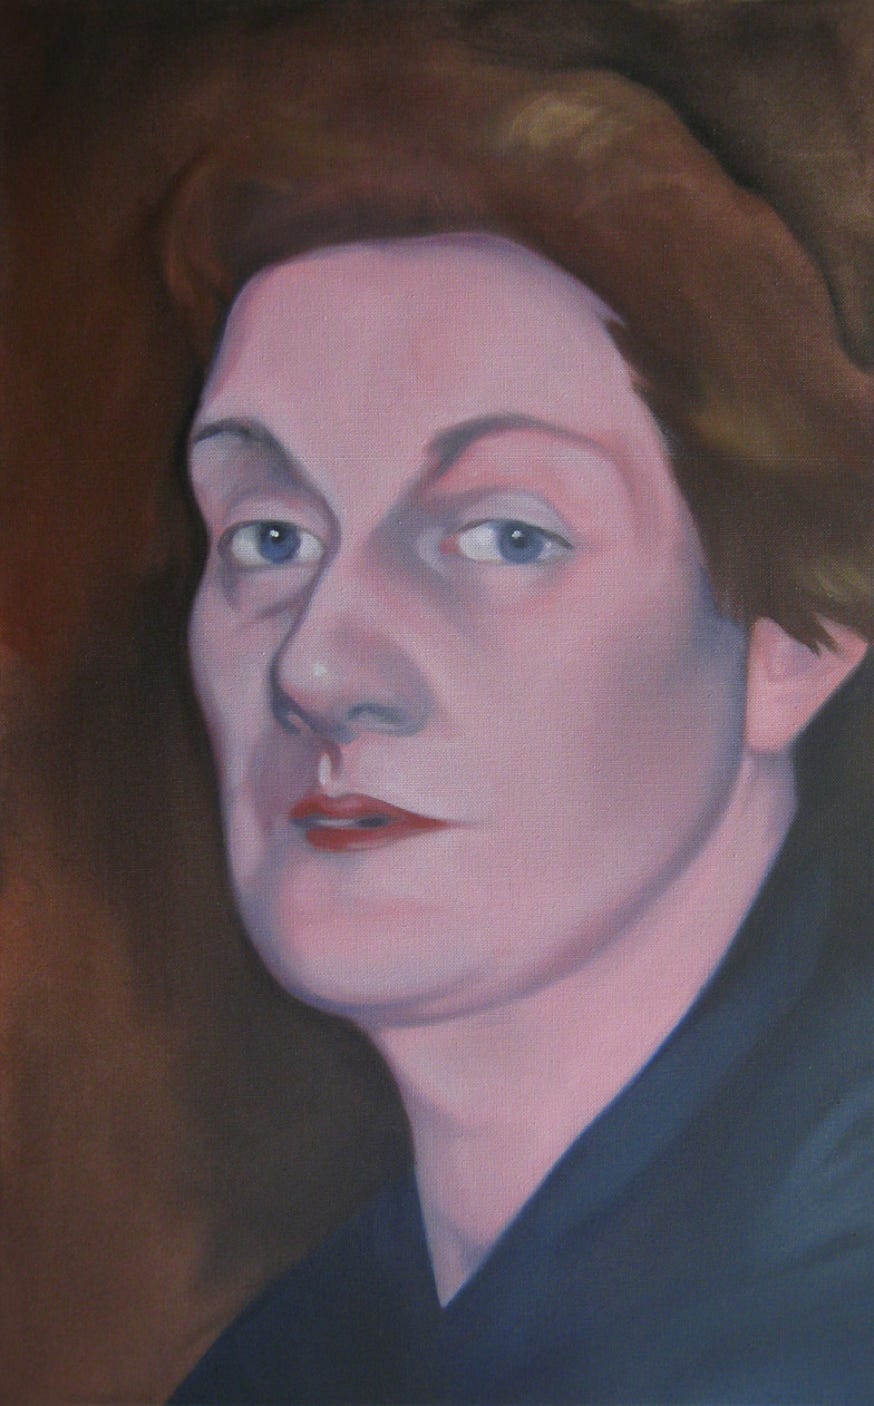 65x40 cm, oil on canvas, 2012